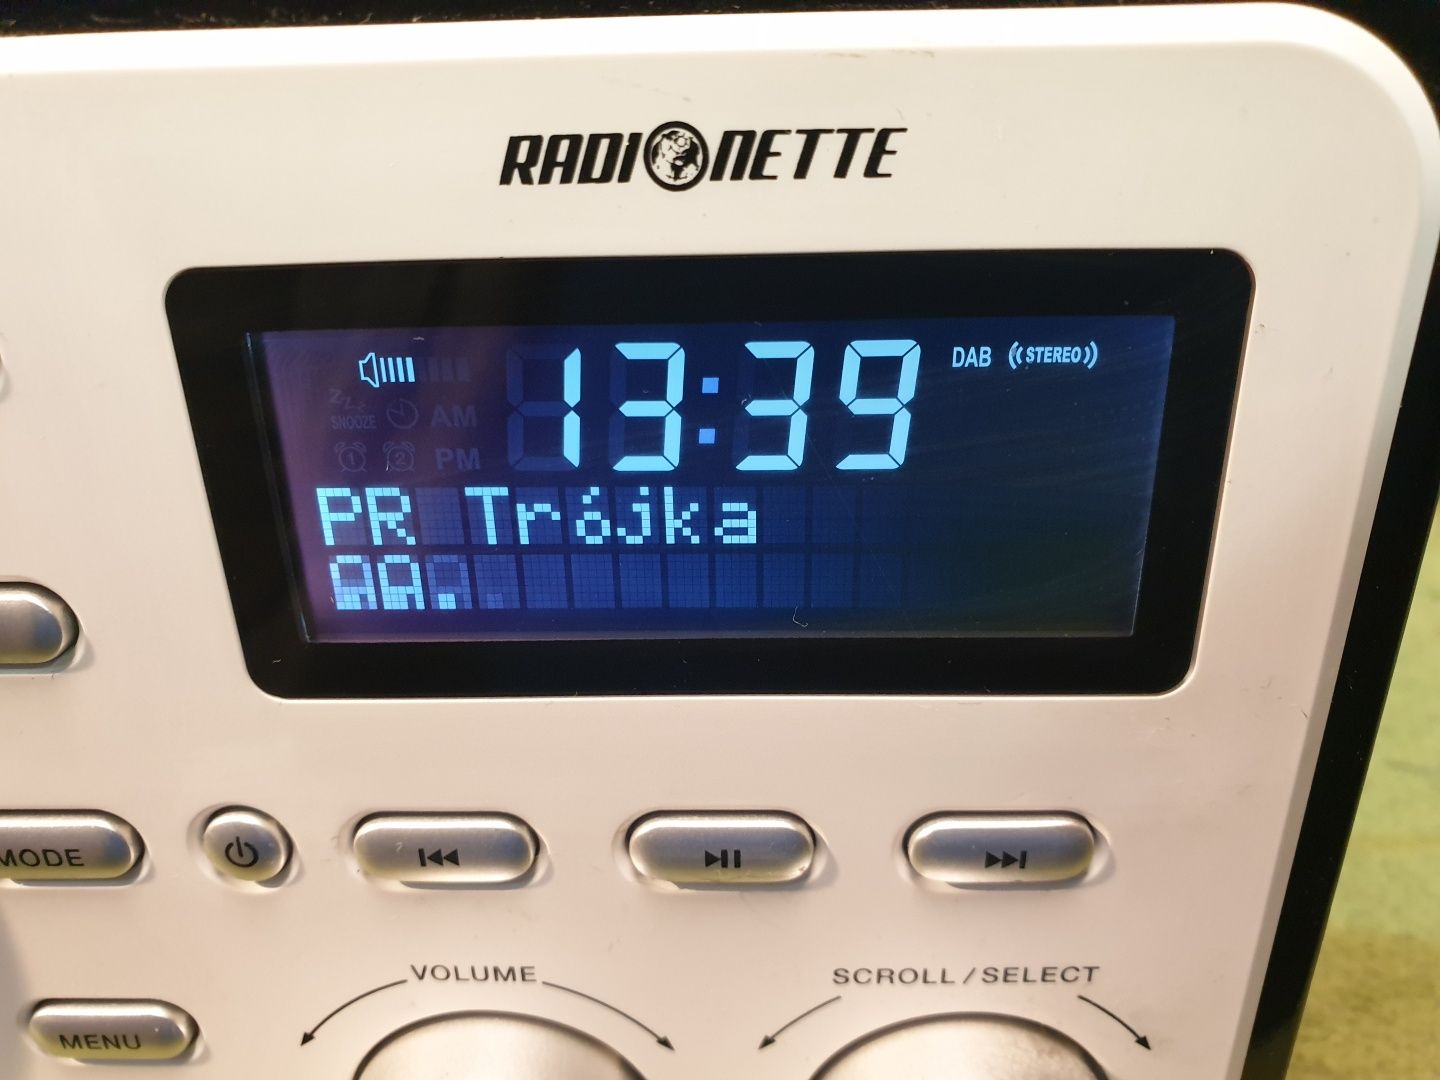 RADIONETTE RNPDABB13E radio tranzystorowe FM, DAB +, AUX,  Bluetooth.